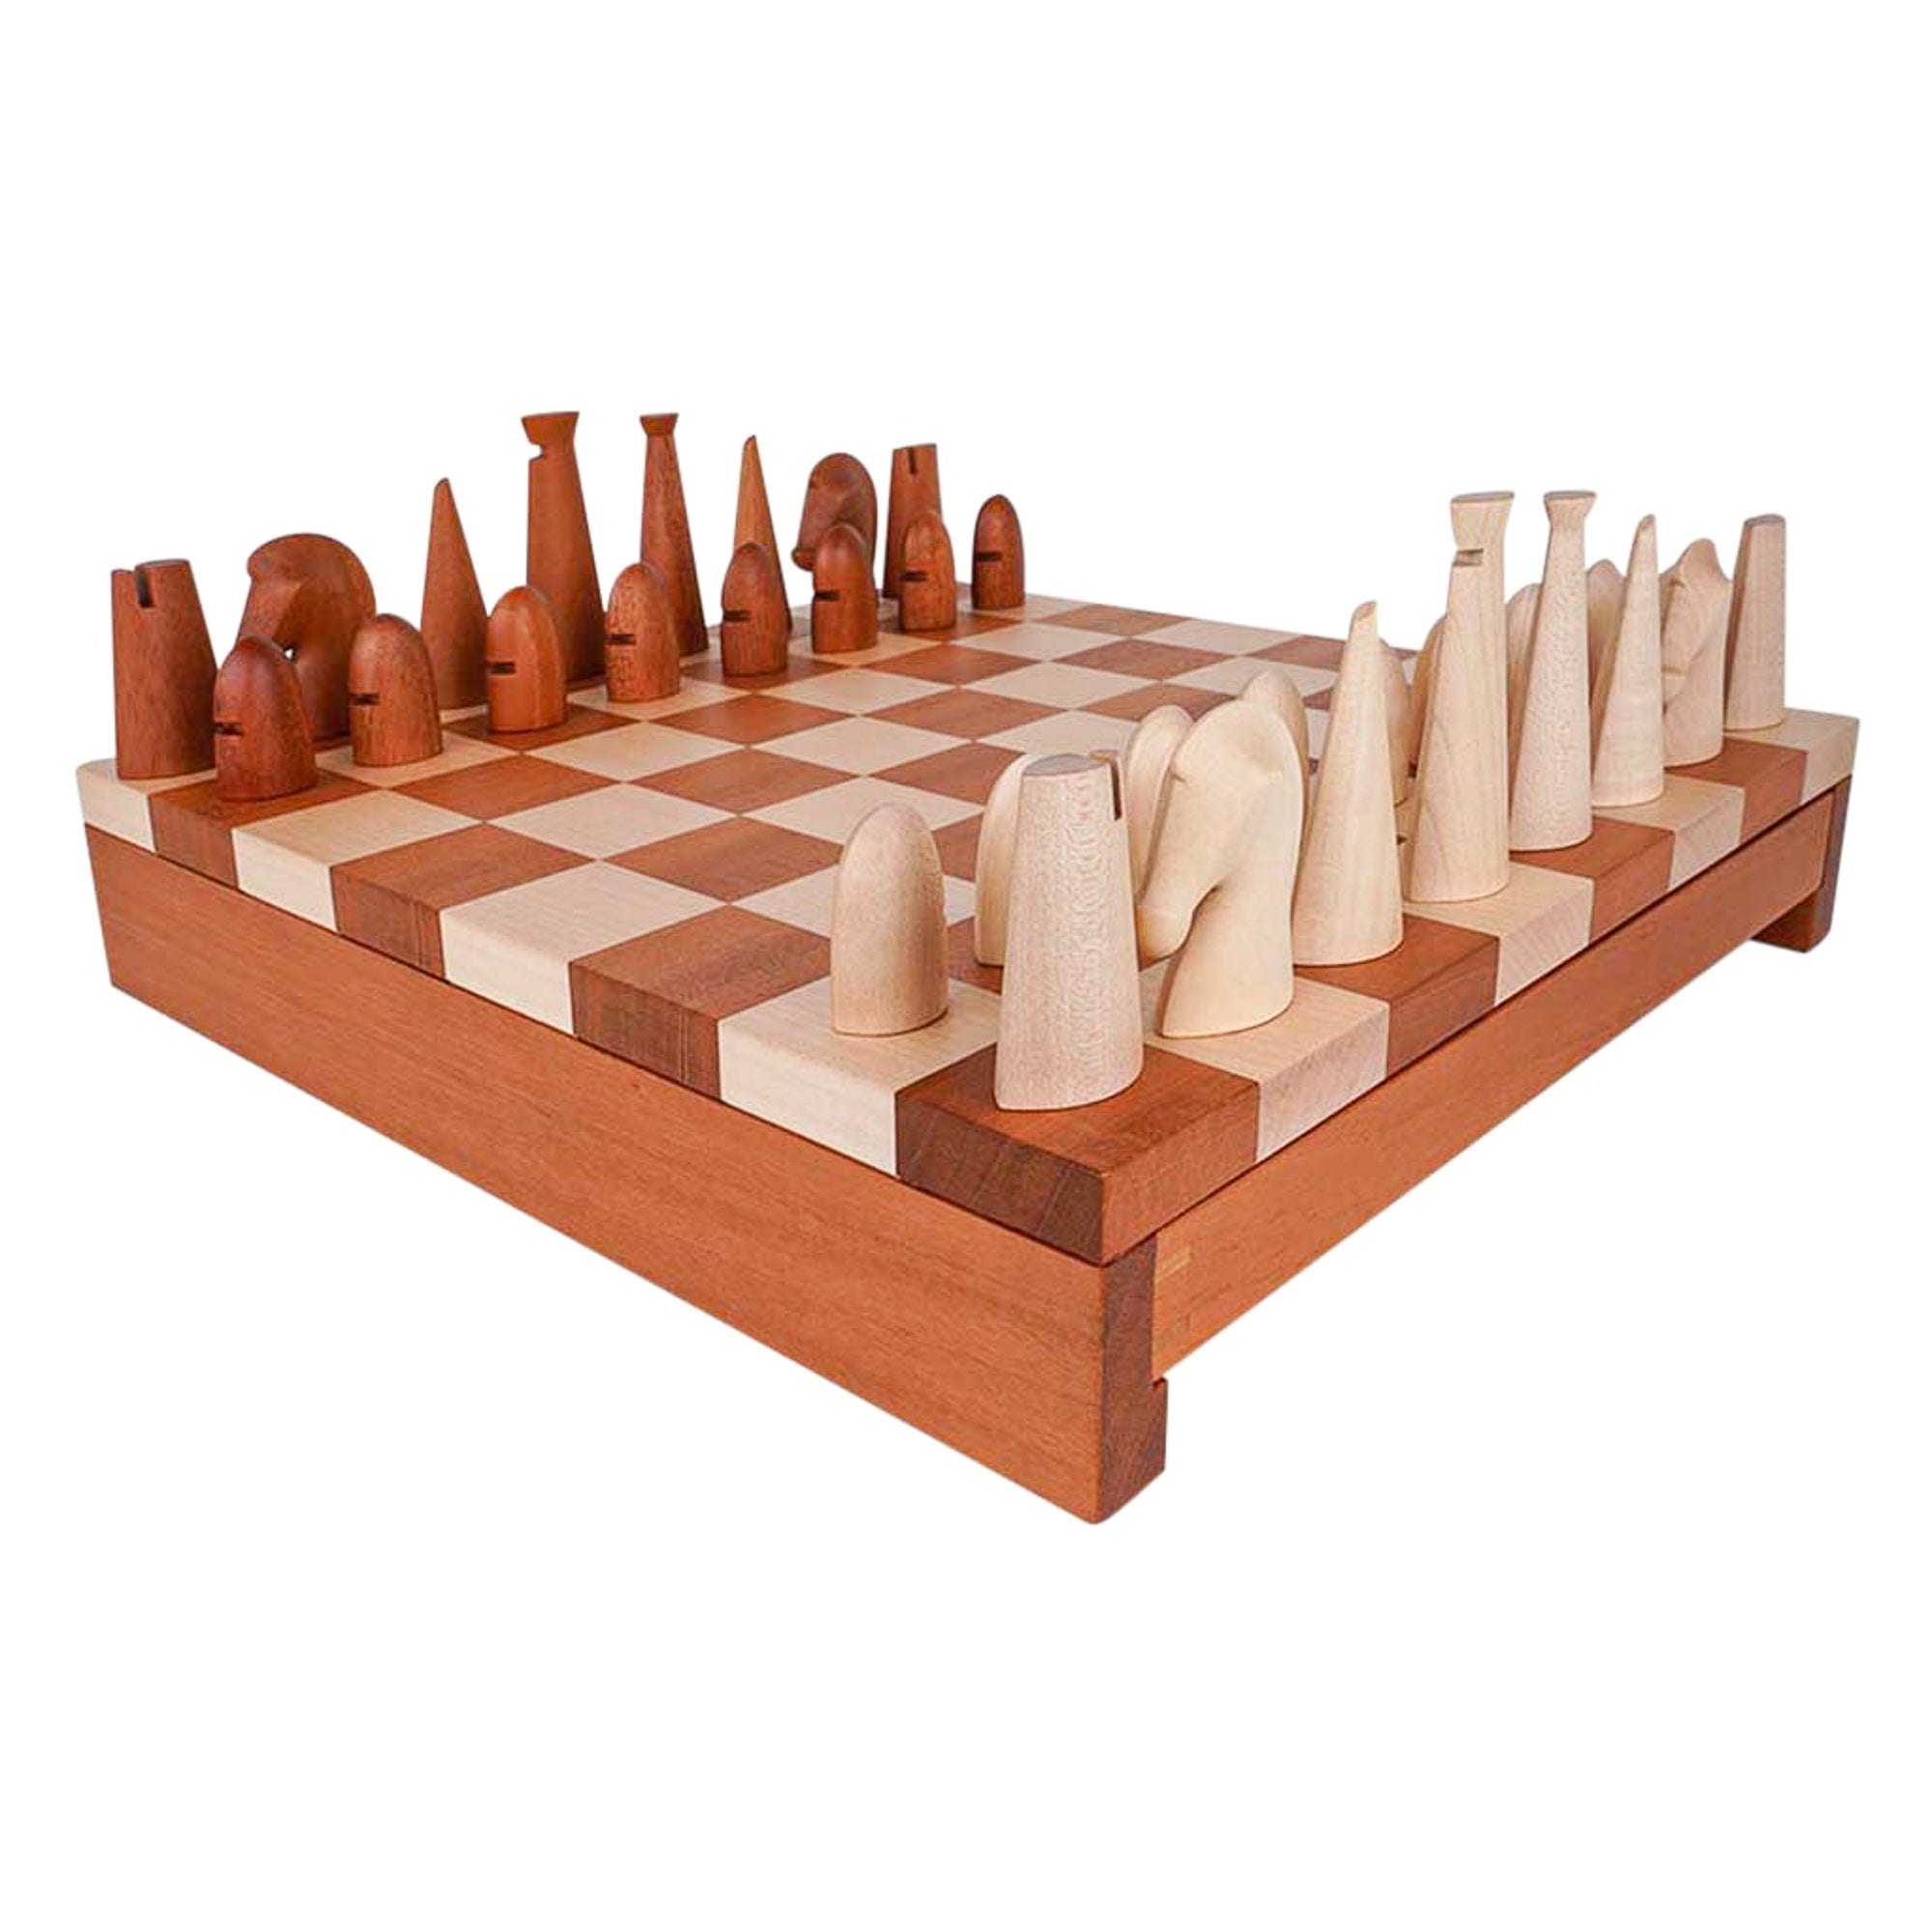 Samarcande mini chess set